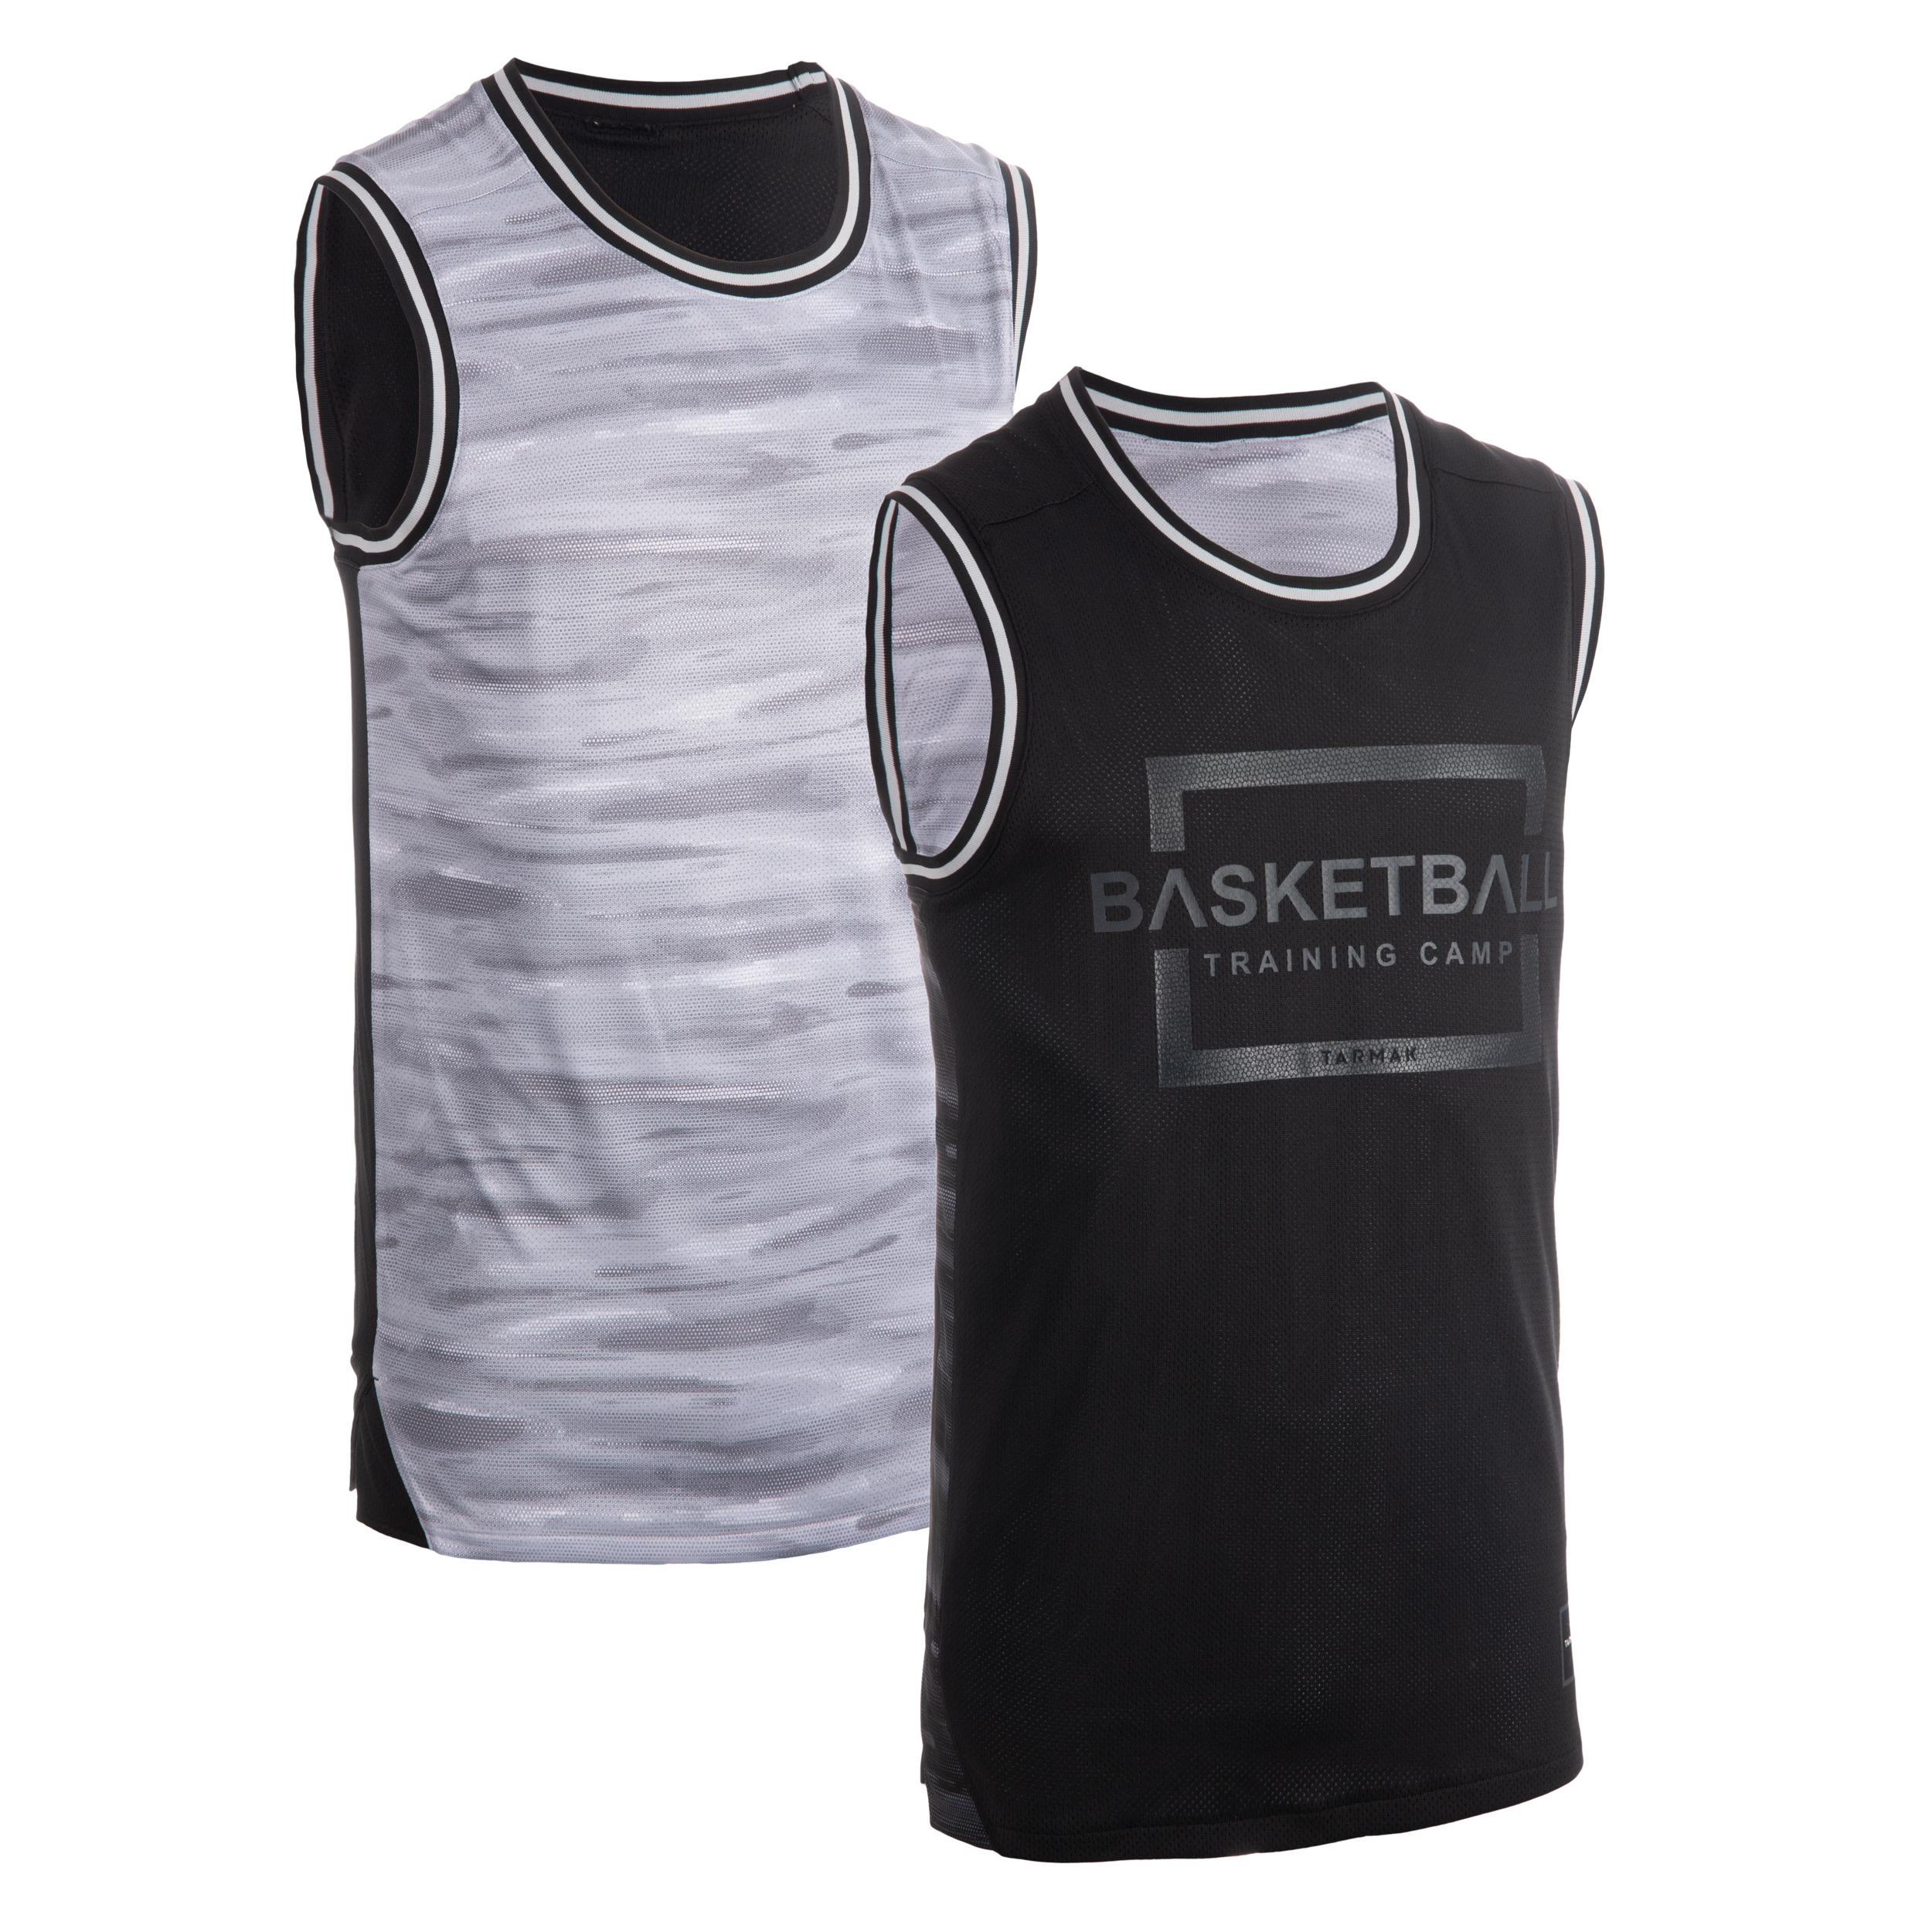 gray and black basketball jersey